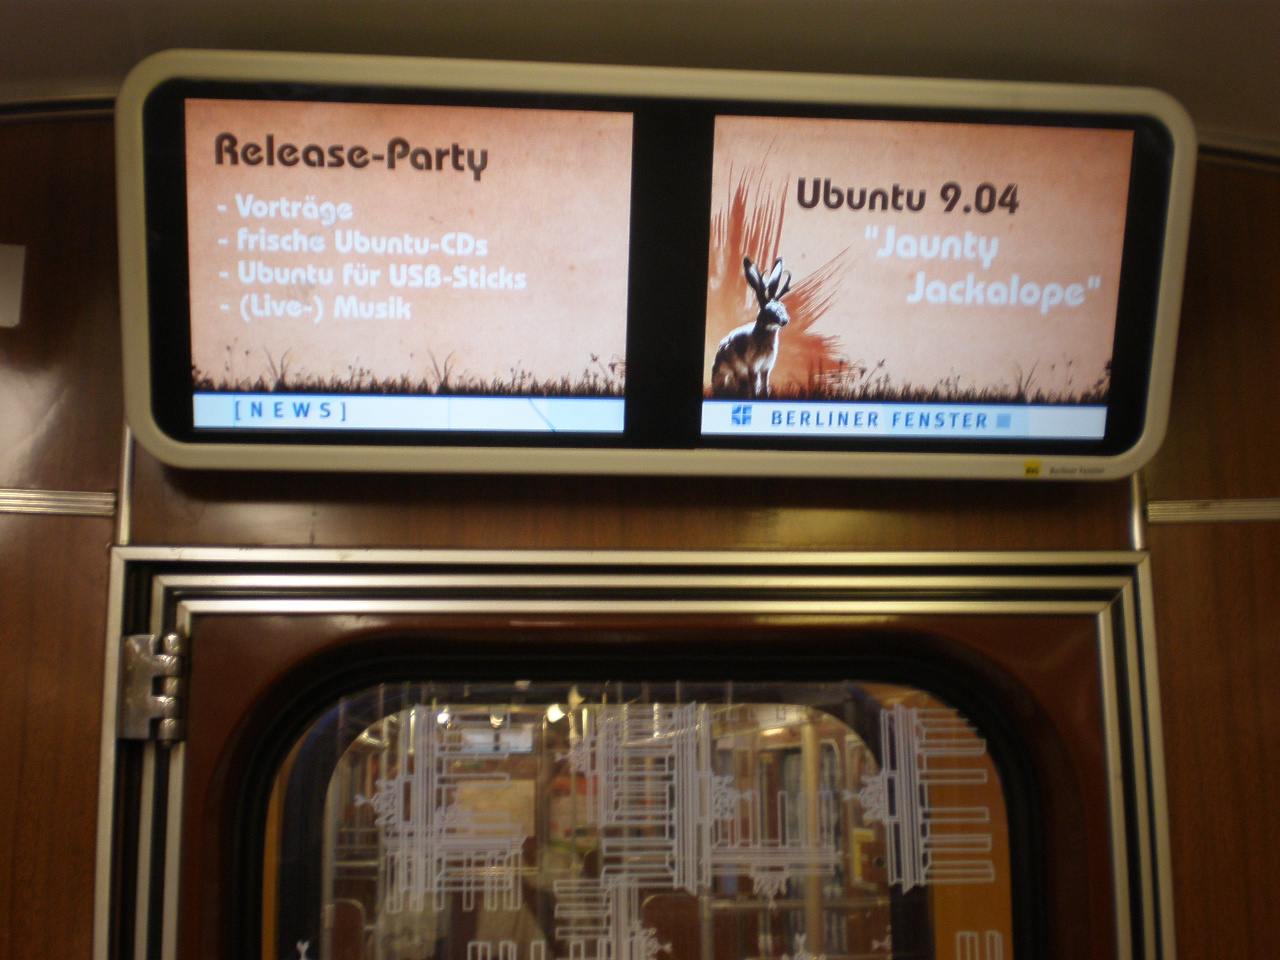 Ubuntu 9.04 Jaunty Jackalope im Berliner Fenster in der U3